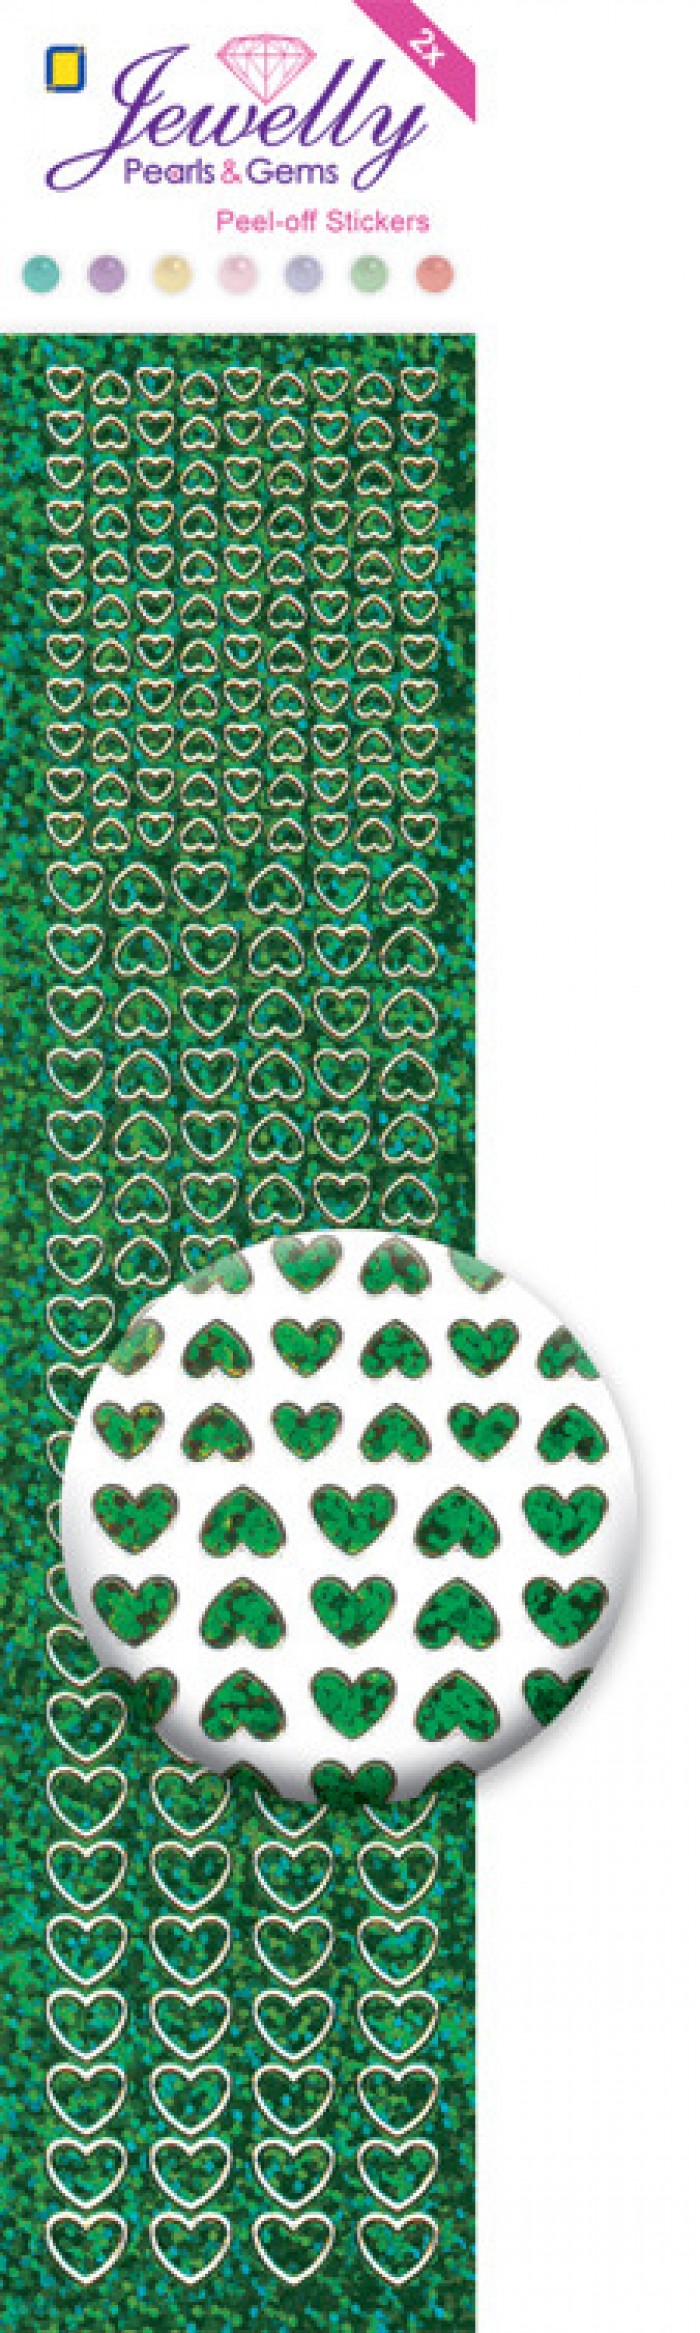 Jewelly Pearls & Gems Hearts Diamond Green, 2 sheets